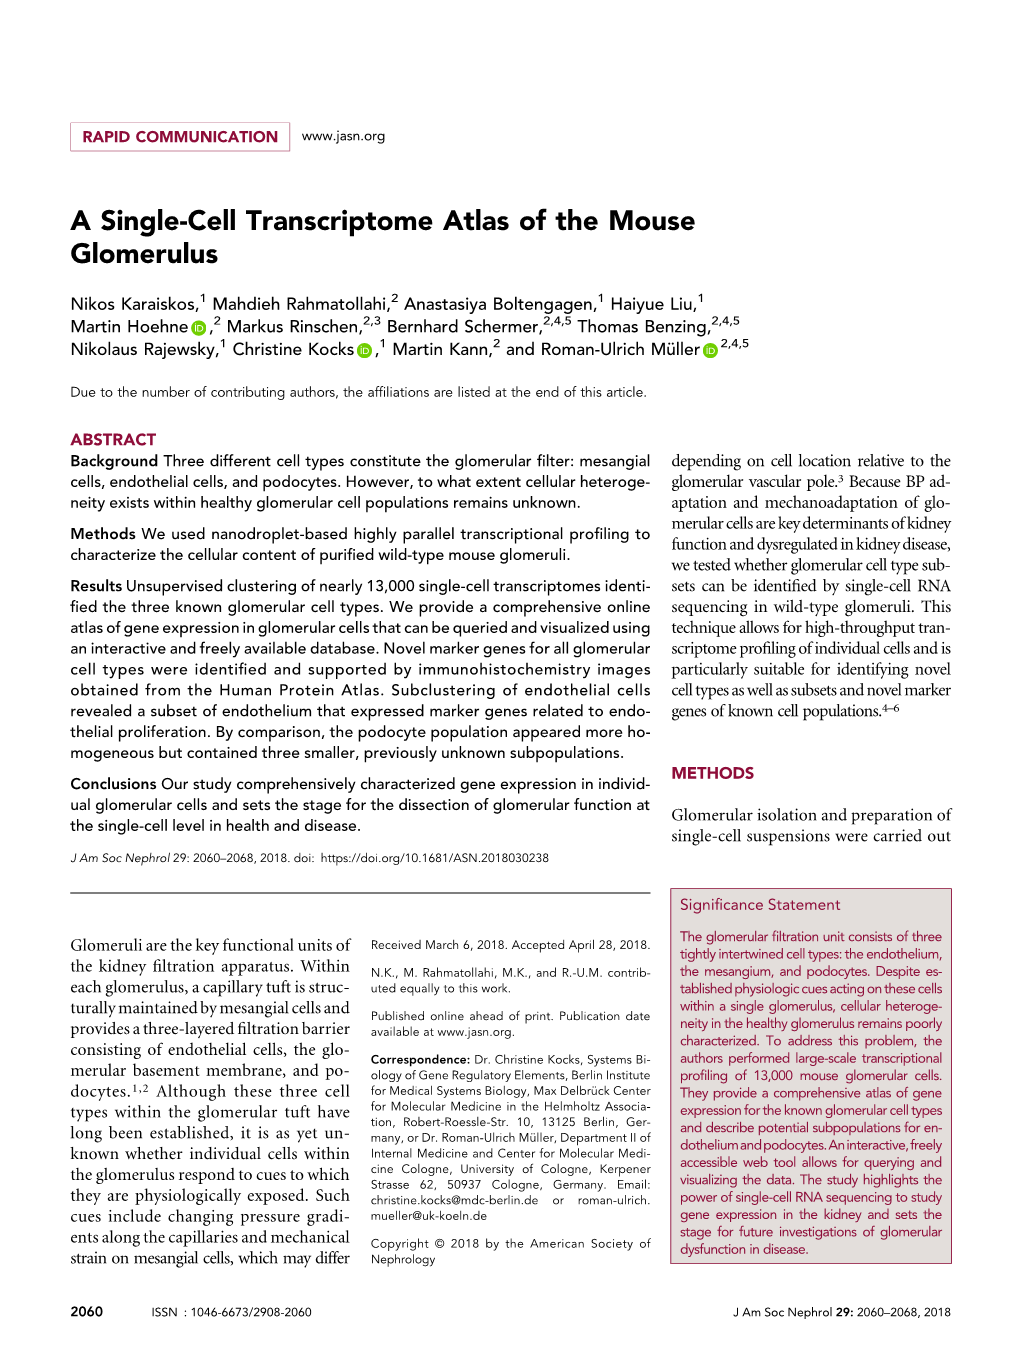 A Single-Cell Transcriptome Atlas of the Mouse Glomerulus